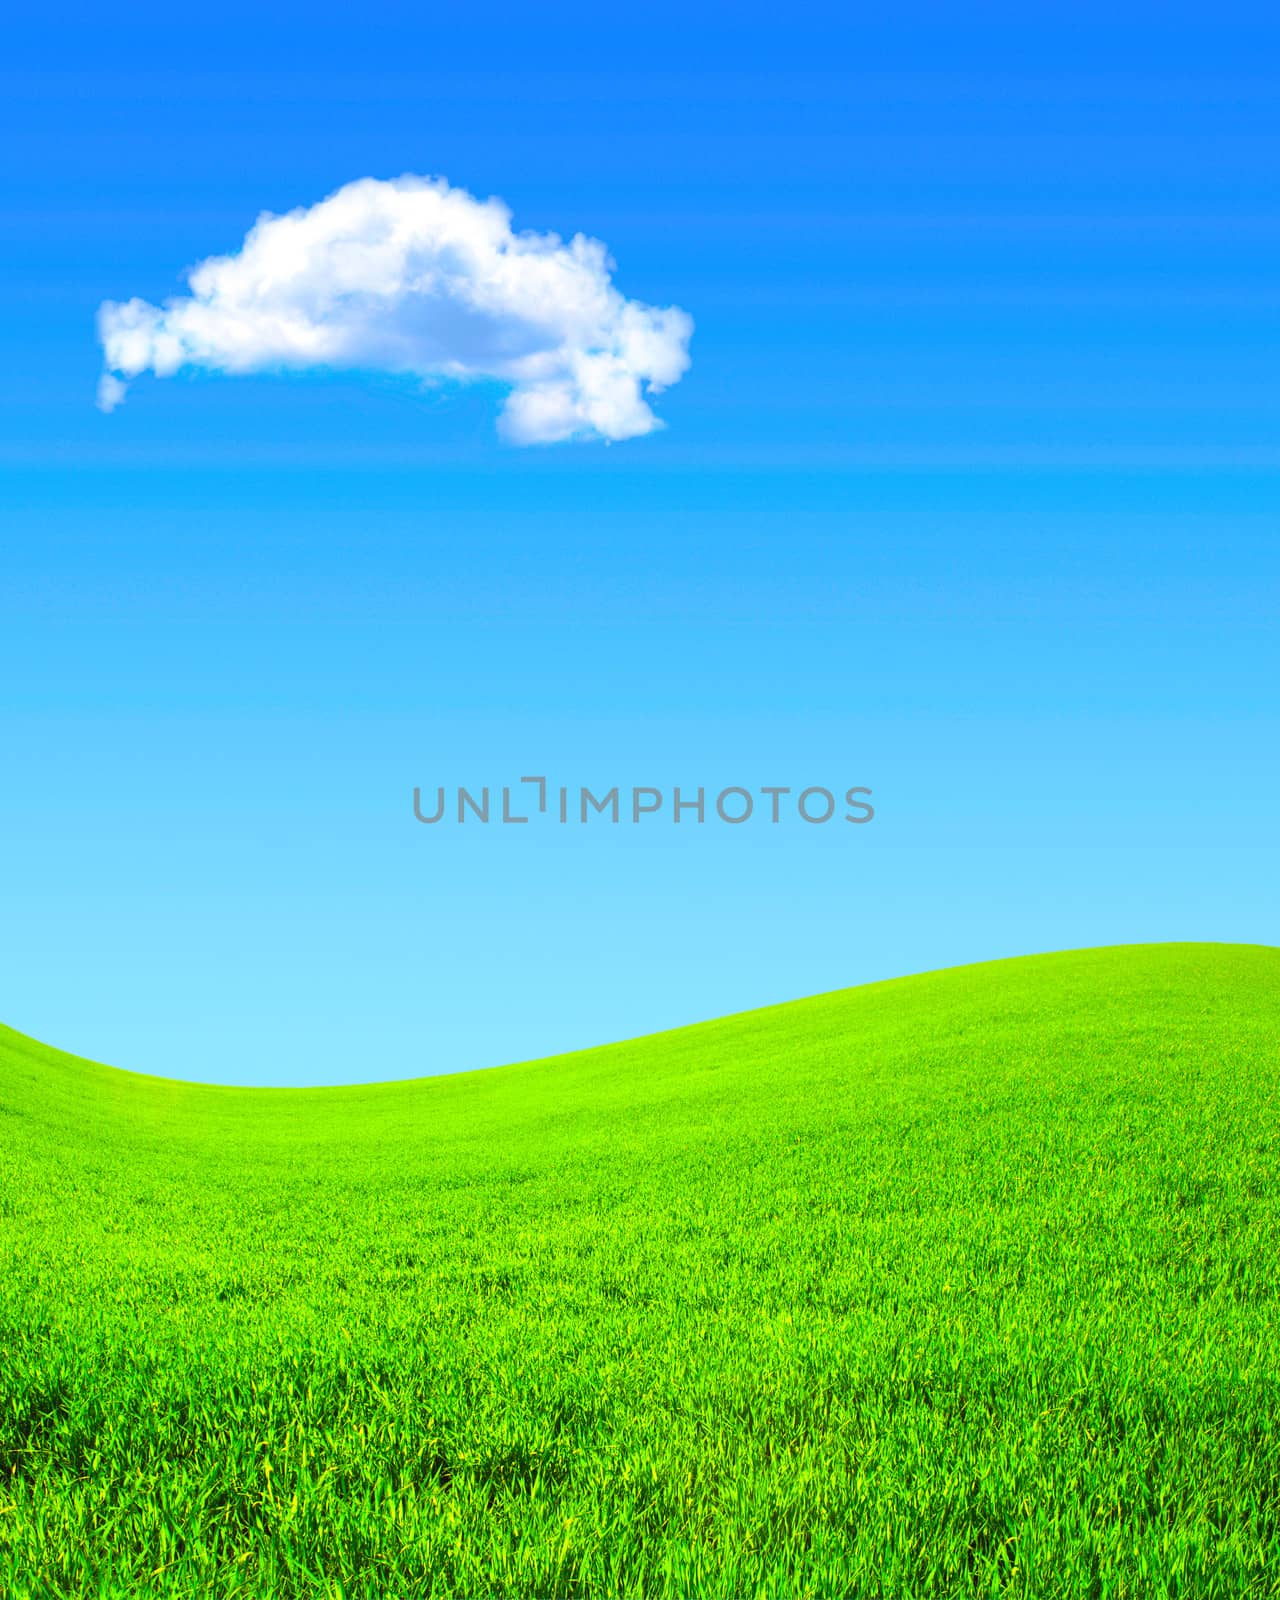 Beautiful summer landscape. A green field, blue sky